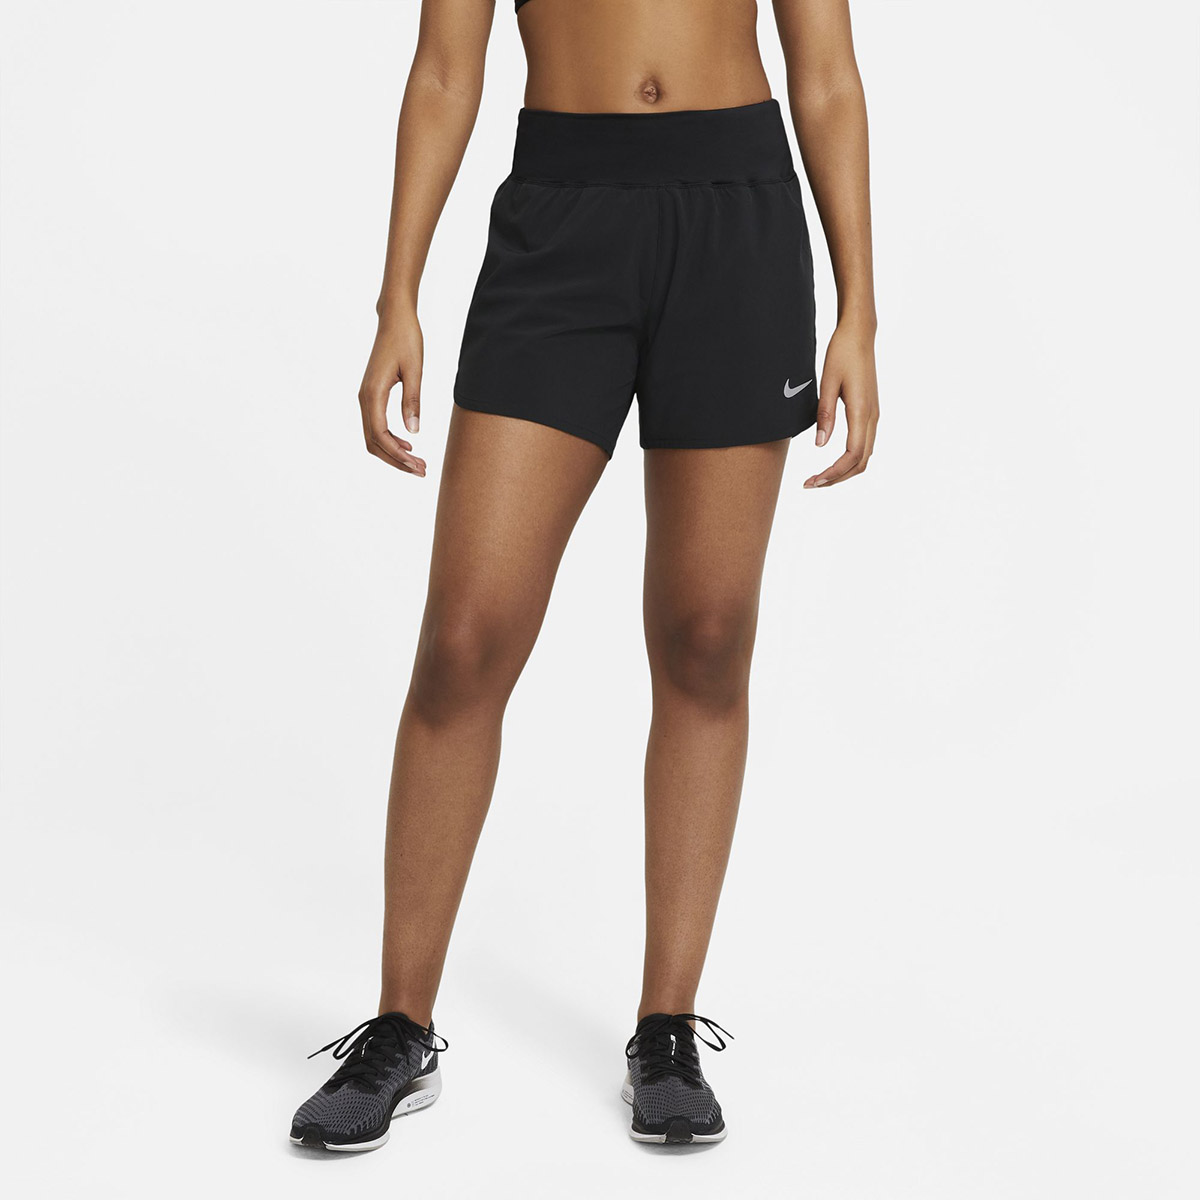 Nike Eclipse Short, , large image number null